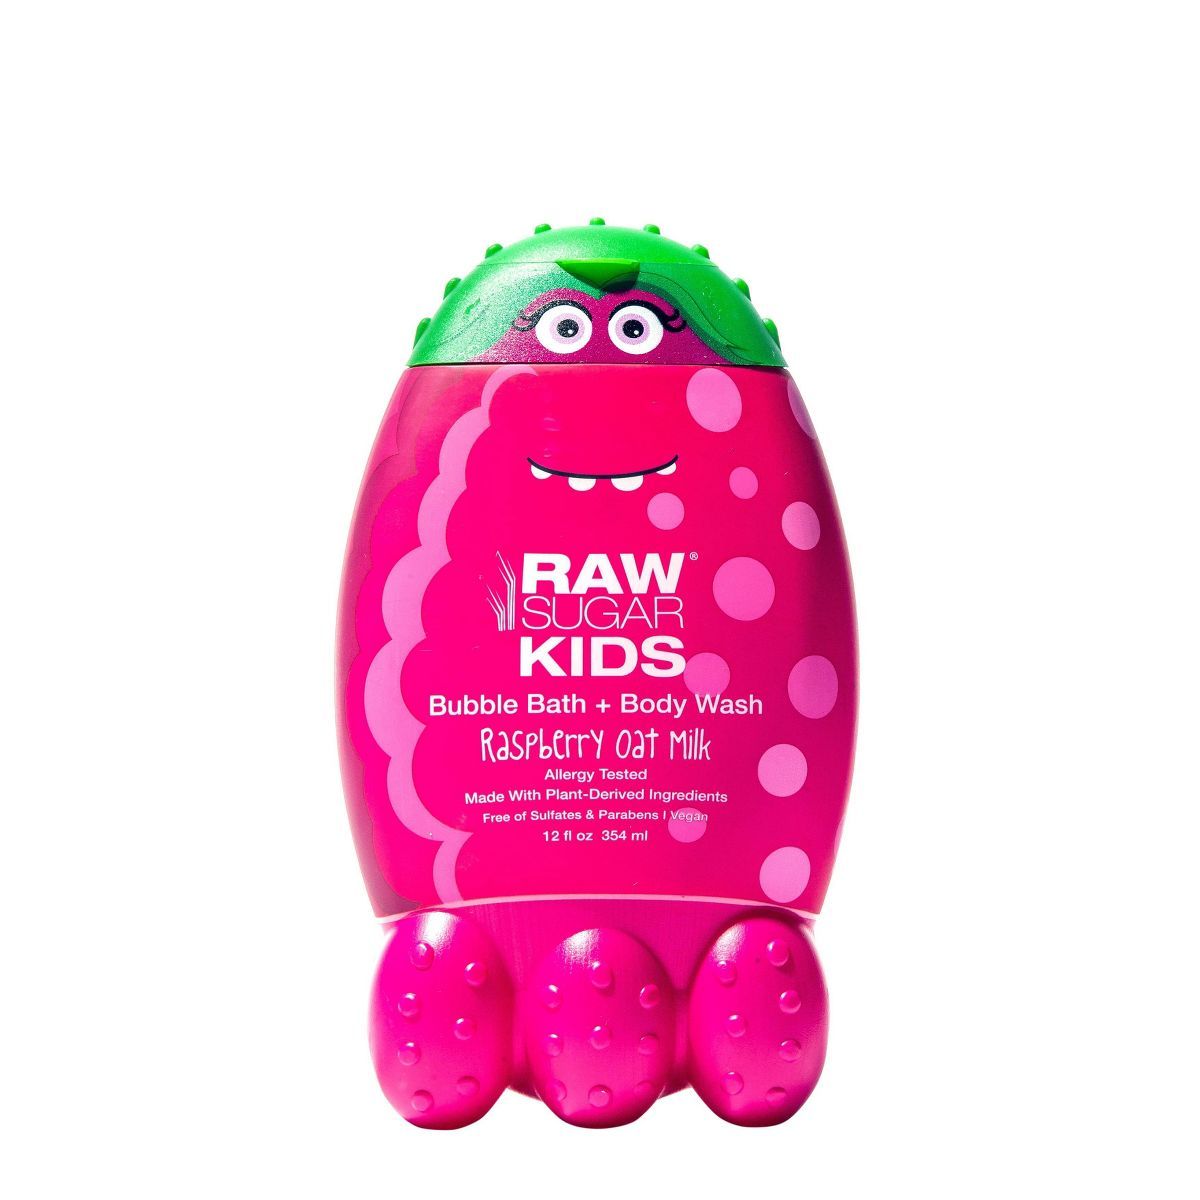 Raw Sugar Kids' Bubble Bath + Body Wash - Raspberry Oat Milk - 12 fl oz | Target